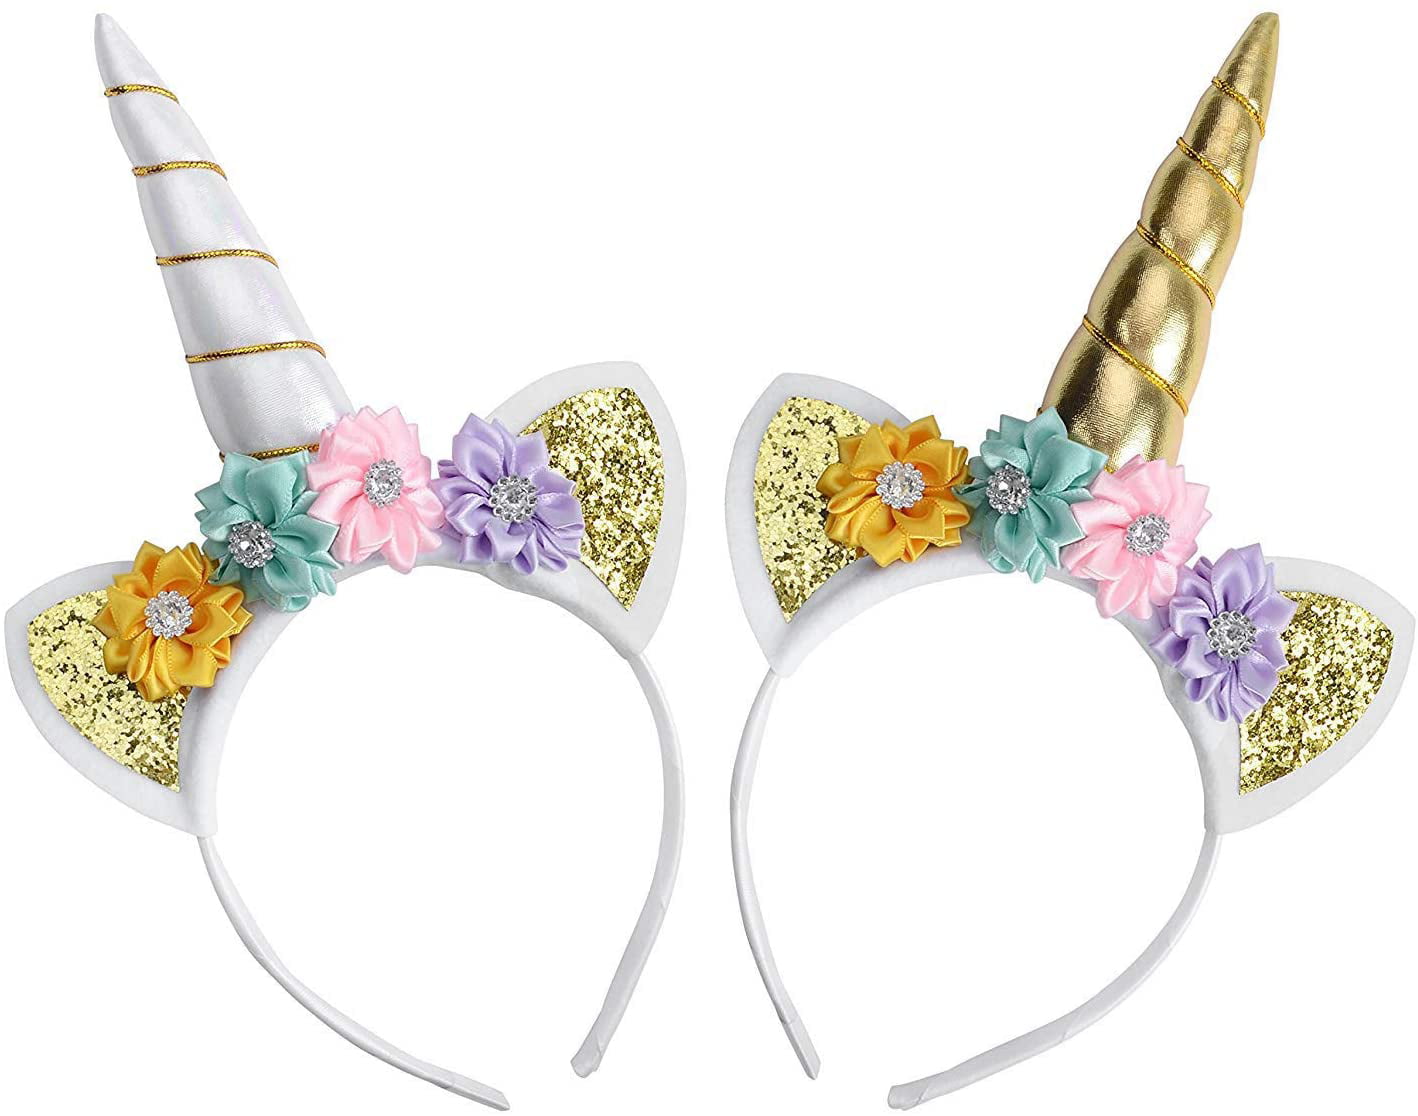 Unicorn Headband Unicorn Headband Gold Horn for Unicorn Party Supplies Flowers Cat Ear Head Bands by Ahier 